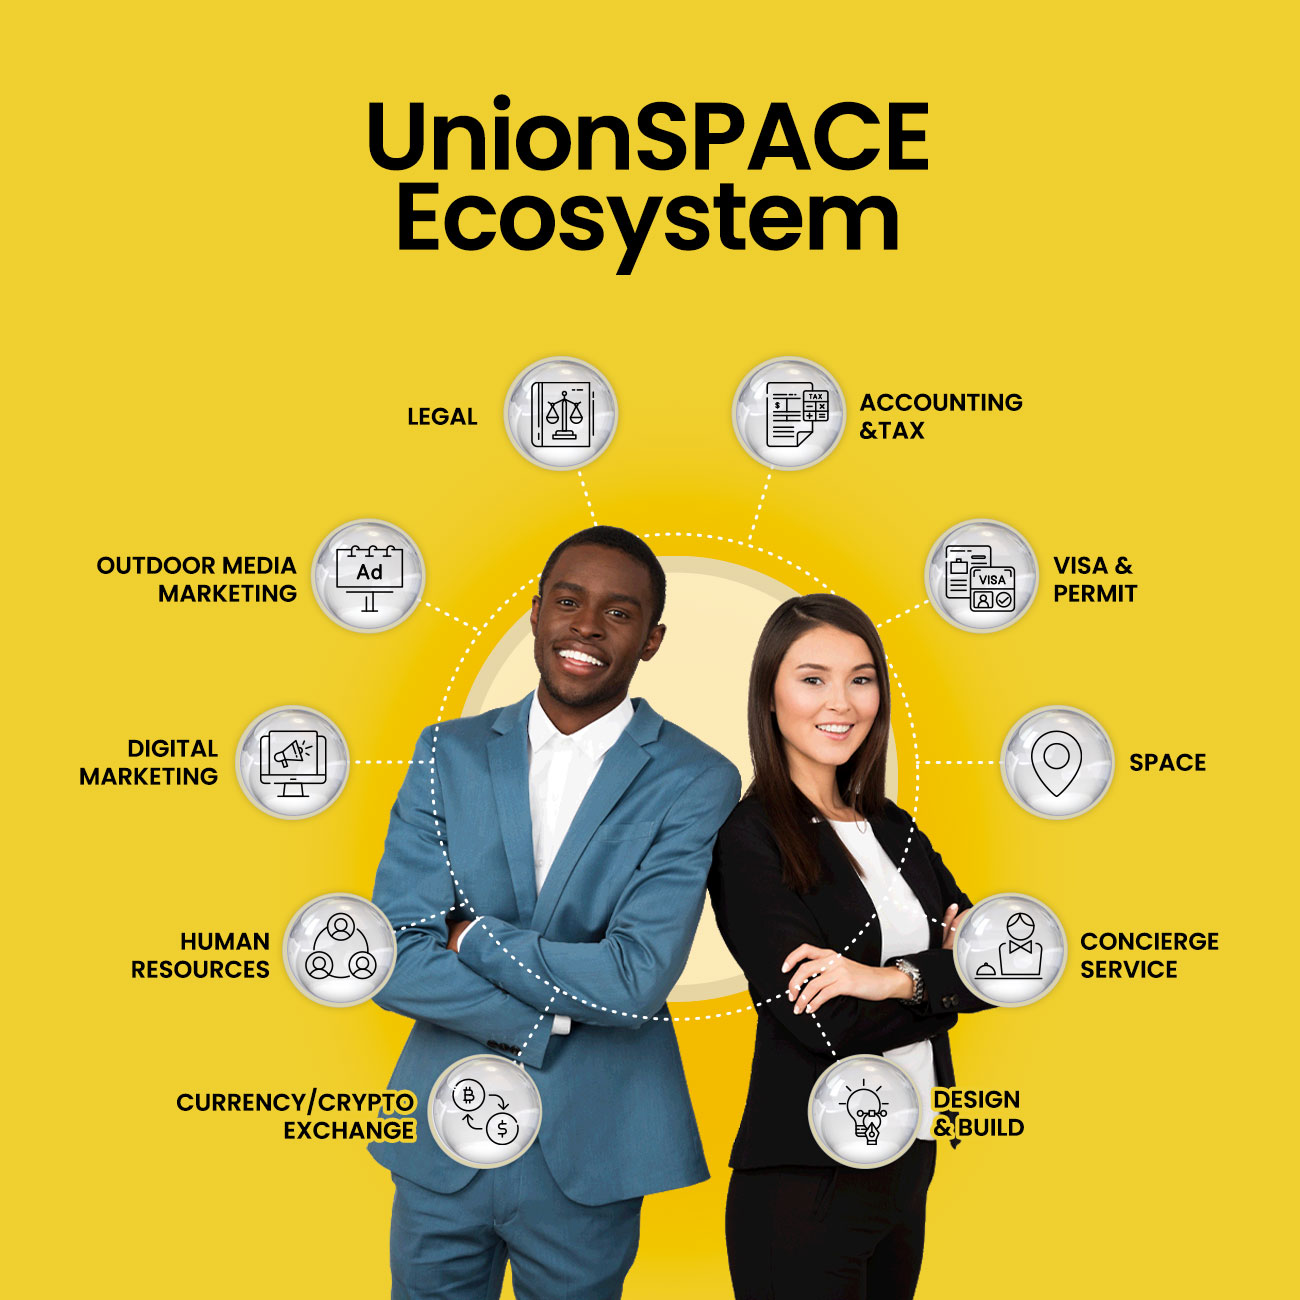 UnionSPACE Ecosystem